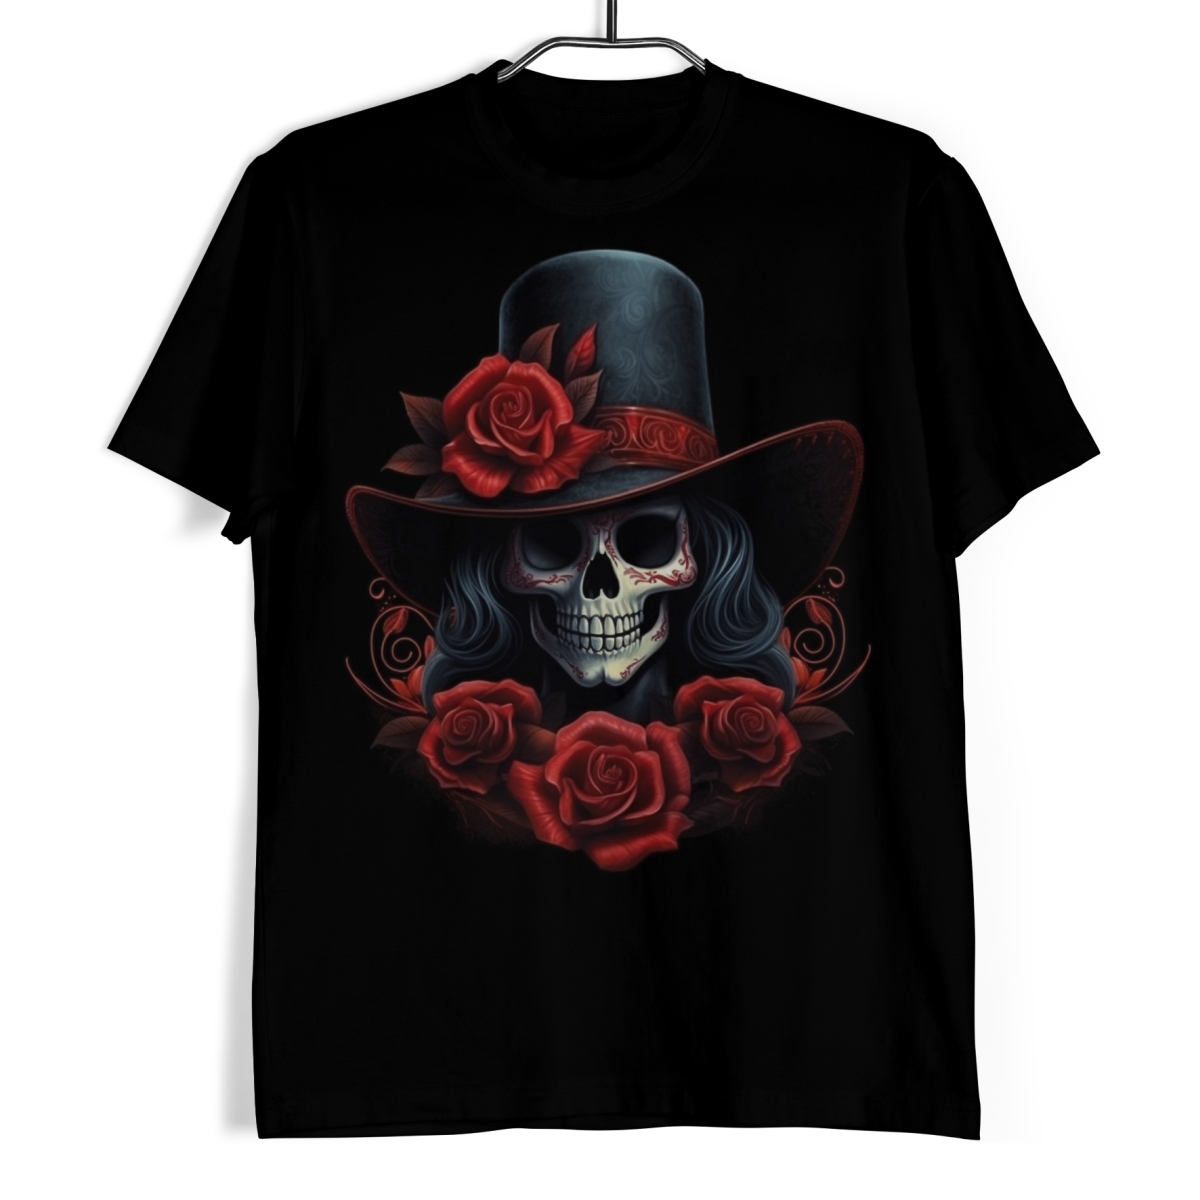 Tričko s lebkou - Dáma s růžemi 3XL